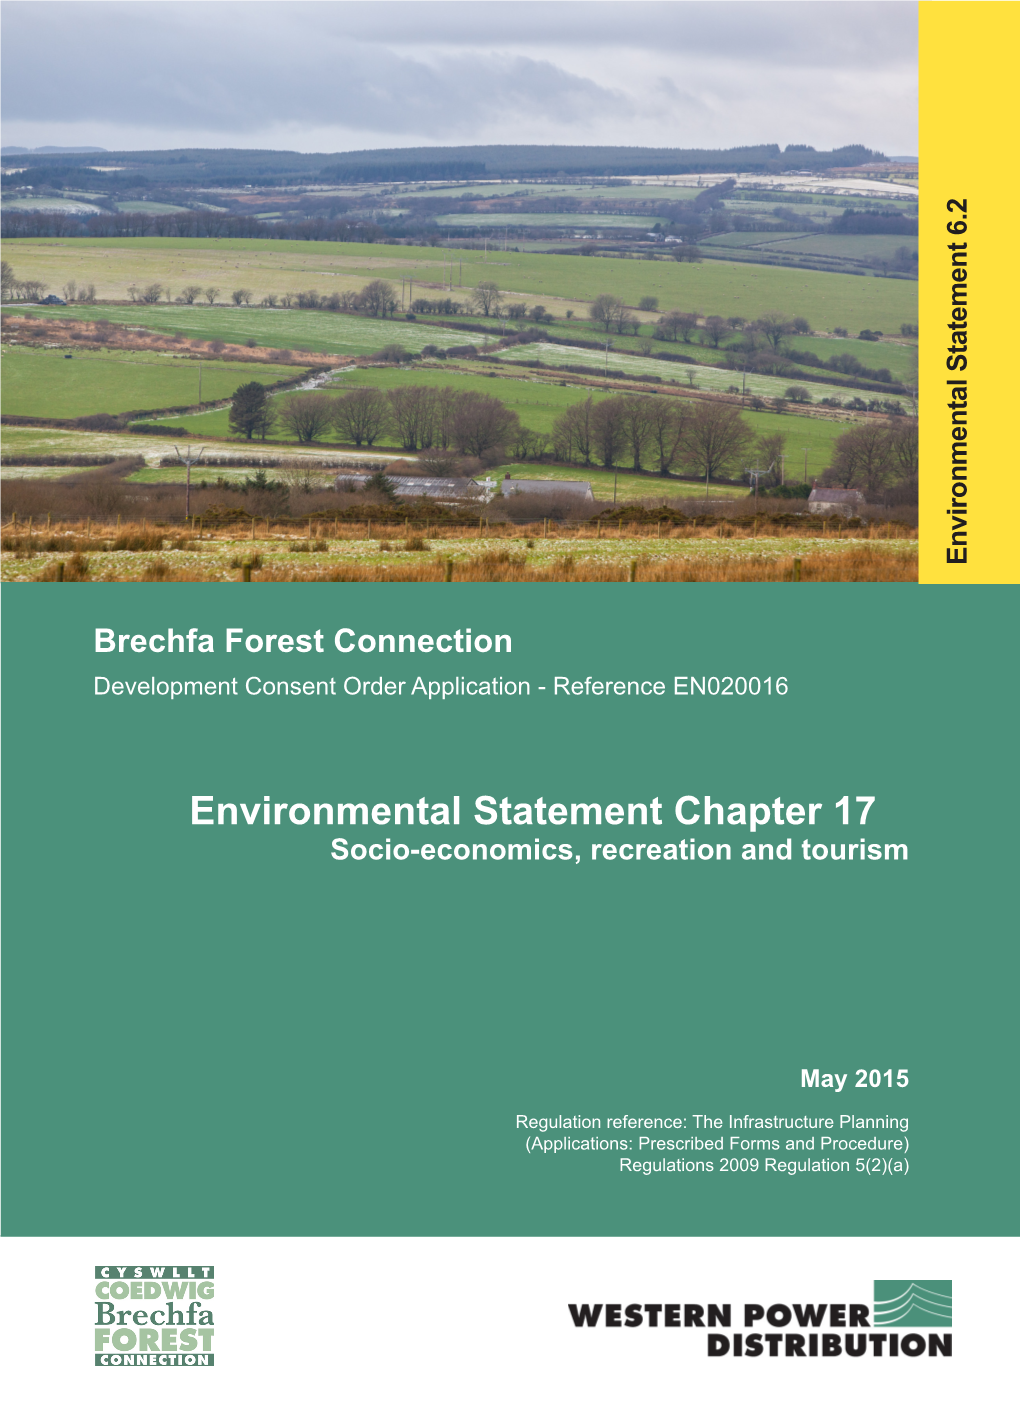 Environmental Statement Chapter 17 Socio-Economics, Recreation and Tourism